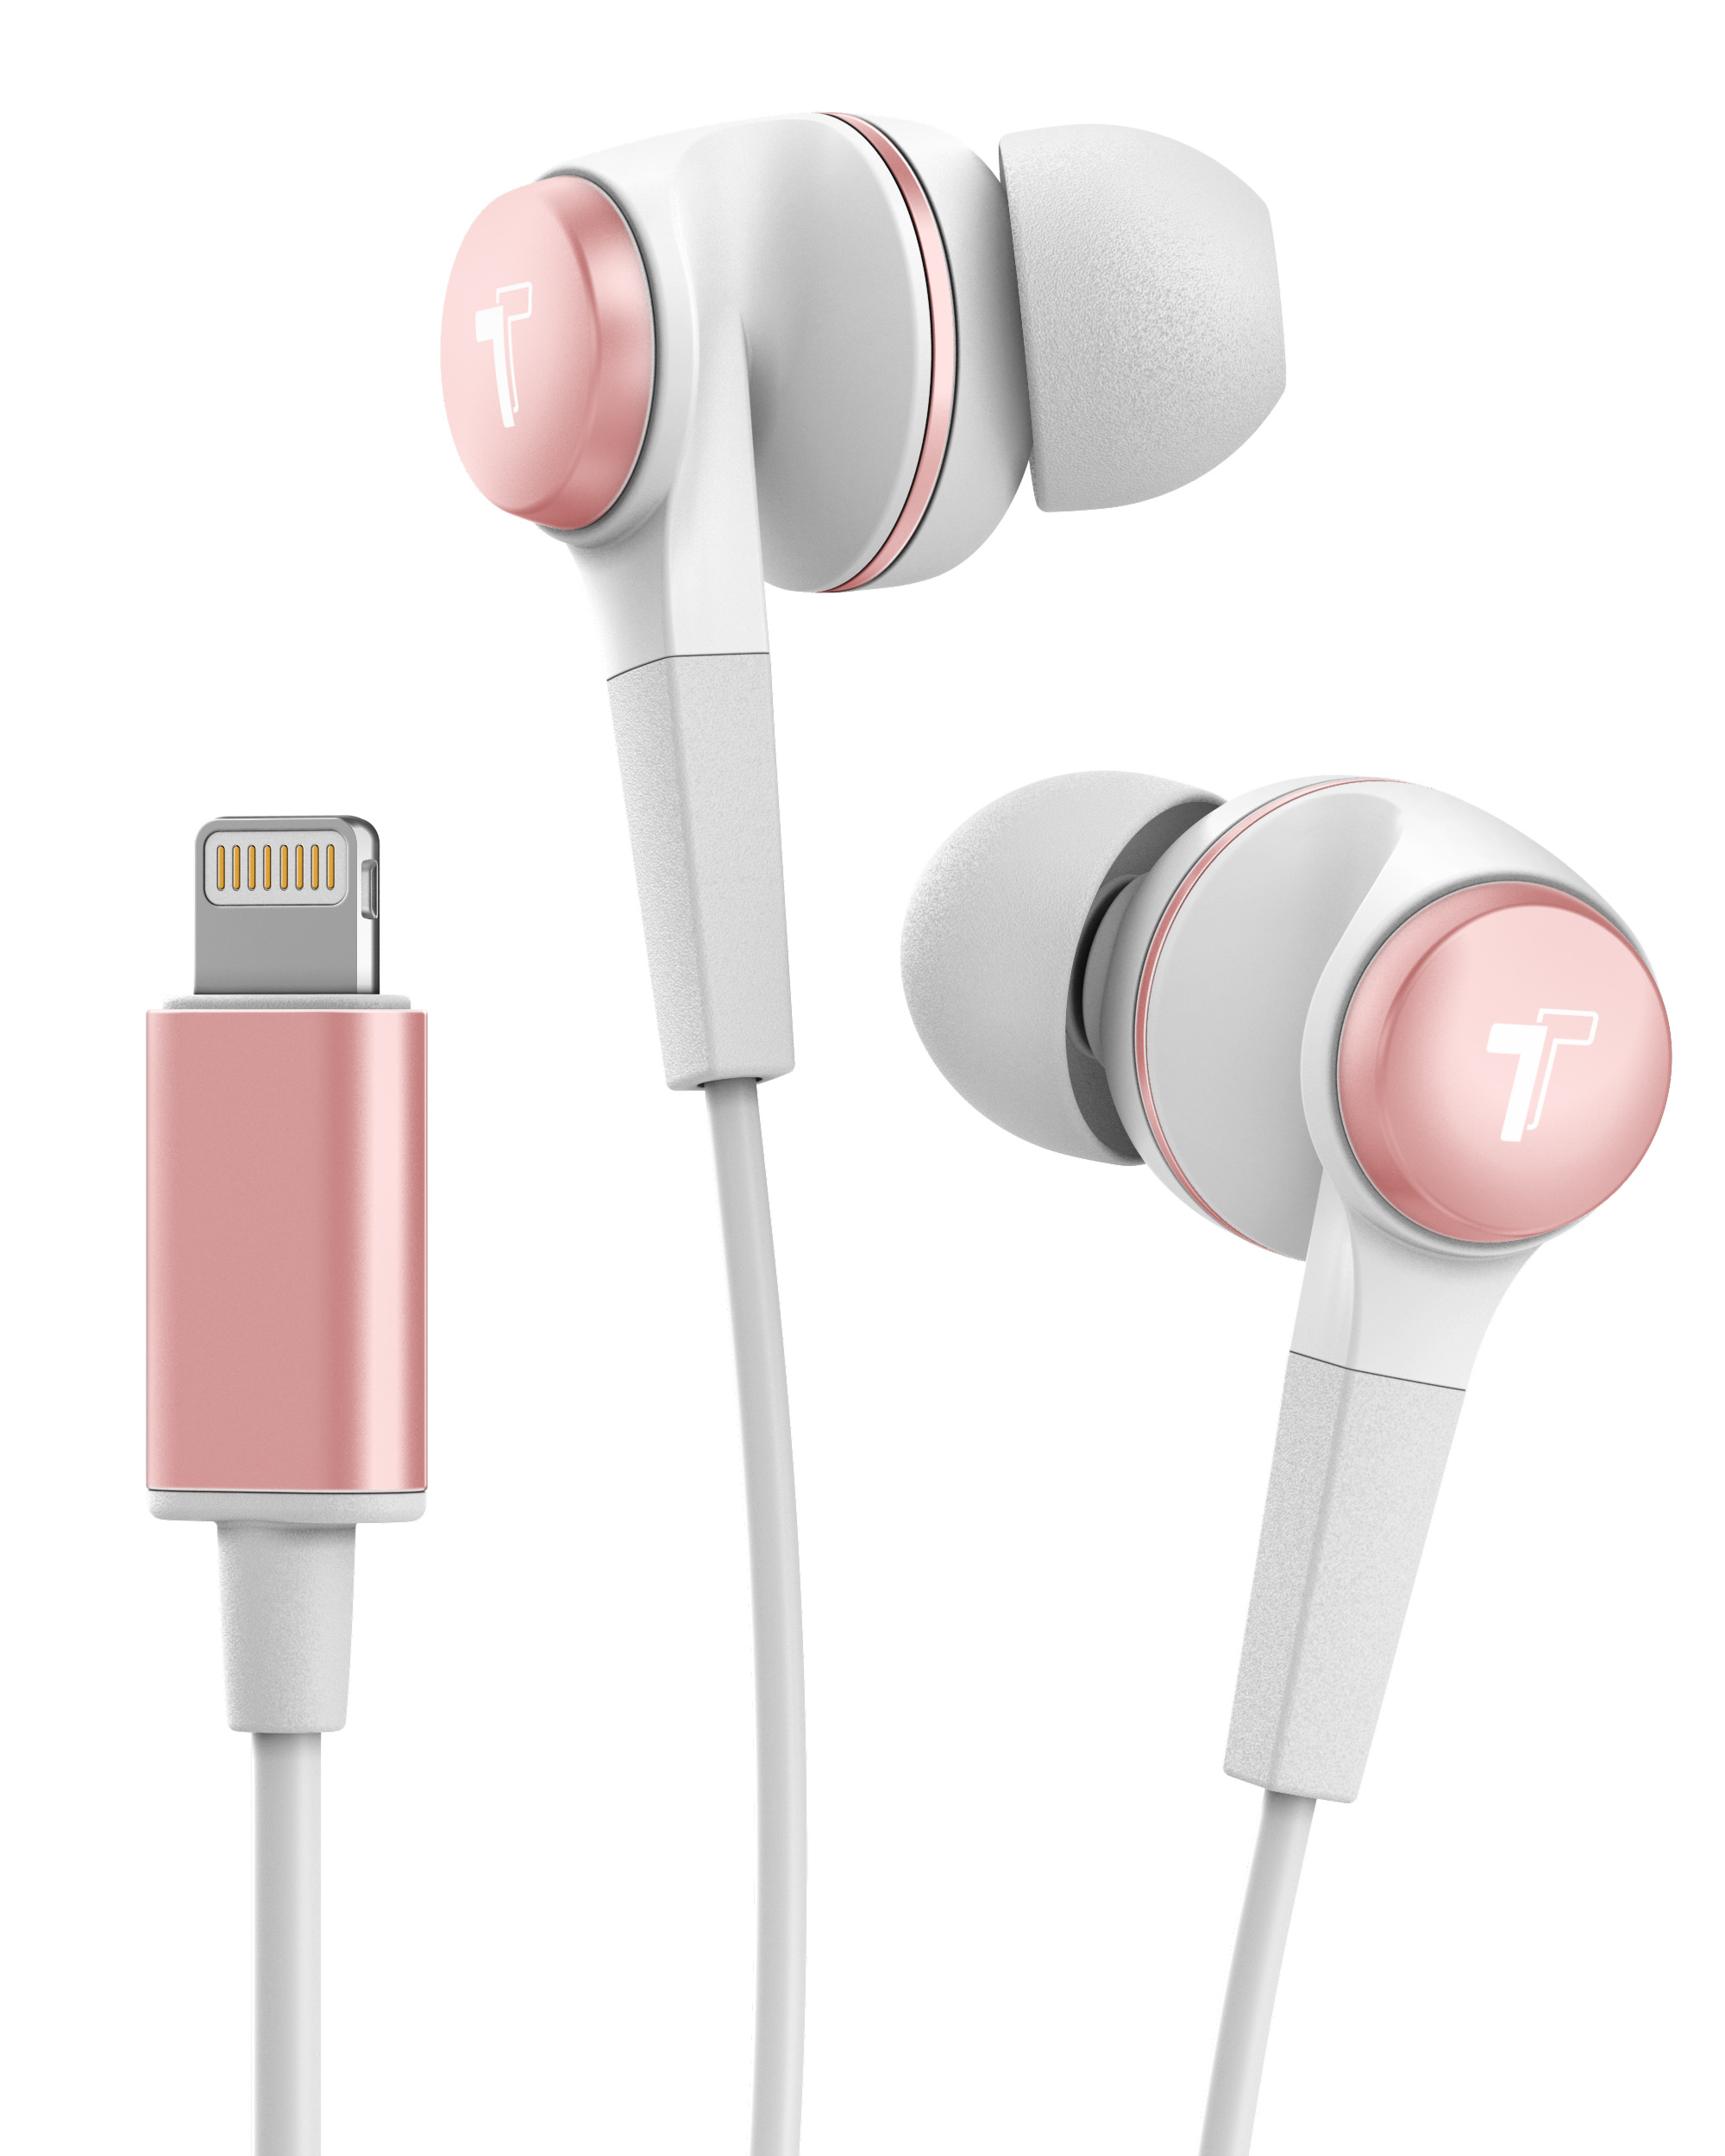 Wired Earphones For Iphone Headphone Apple Certified In Ear Lightning Earbuds Rose V1 Encased